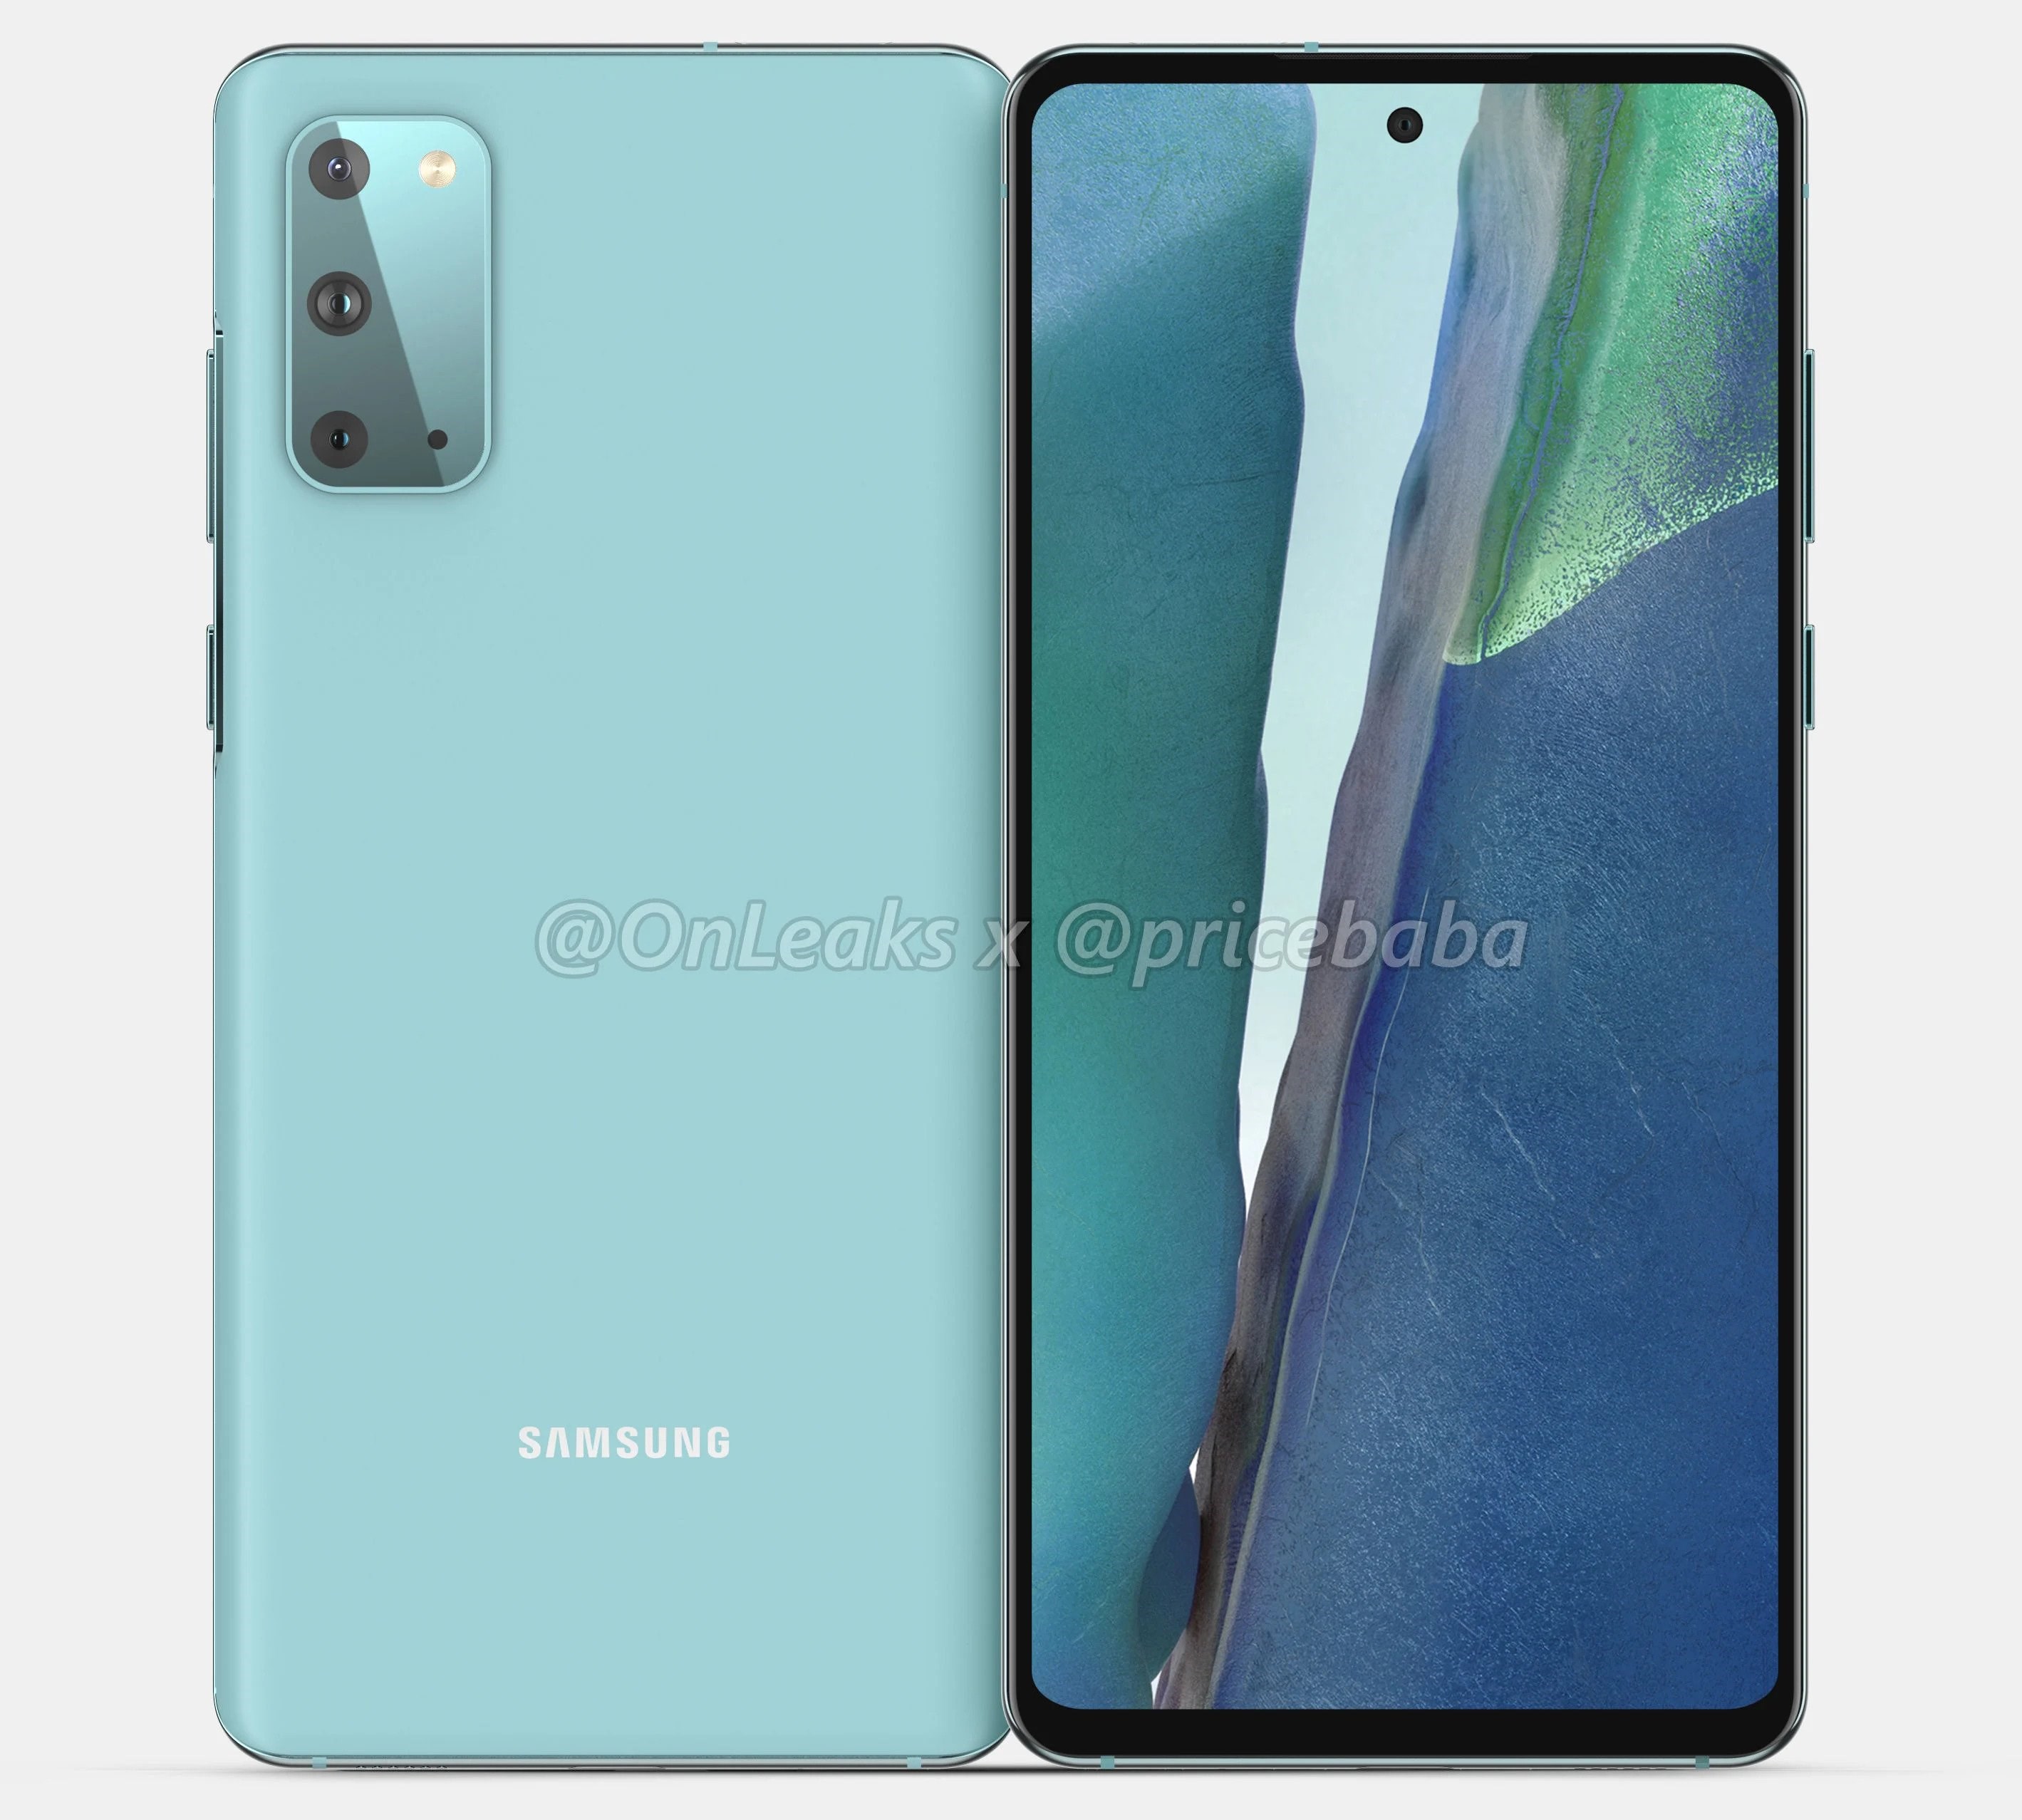 Samsung Galaxy S20 Fan Edition 5G'nin render görüntüleri ortaya çıktı!